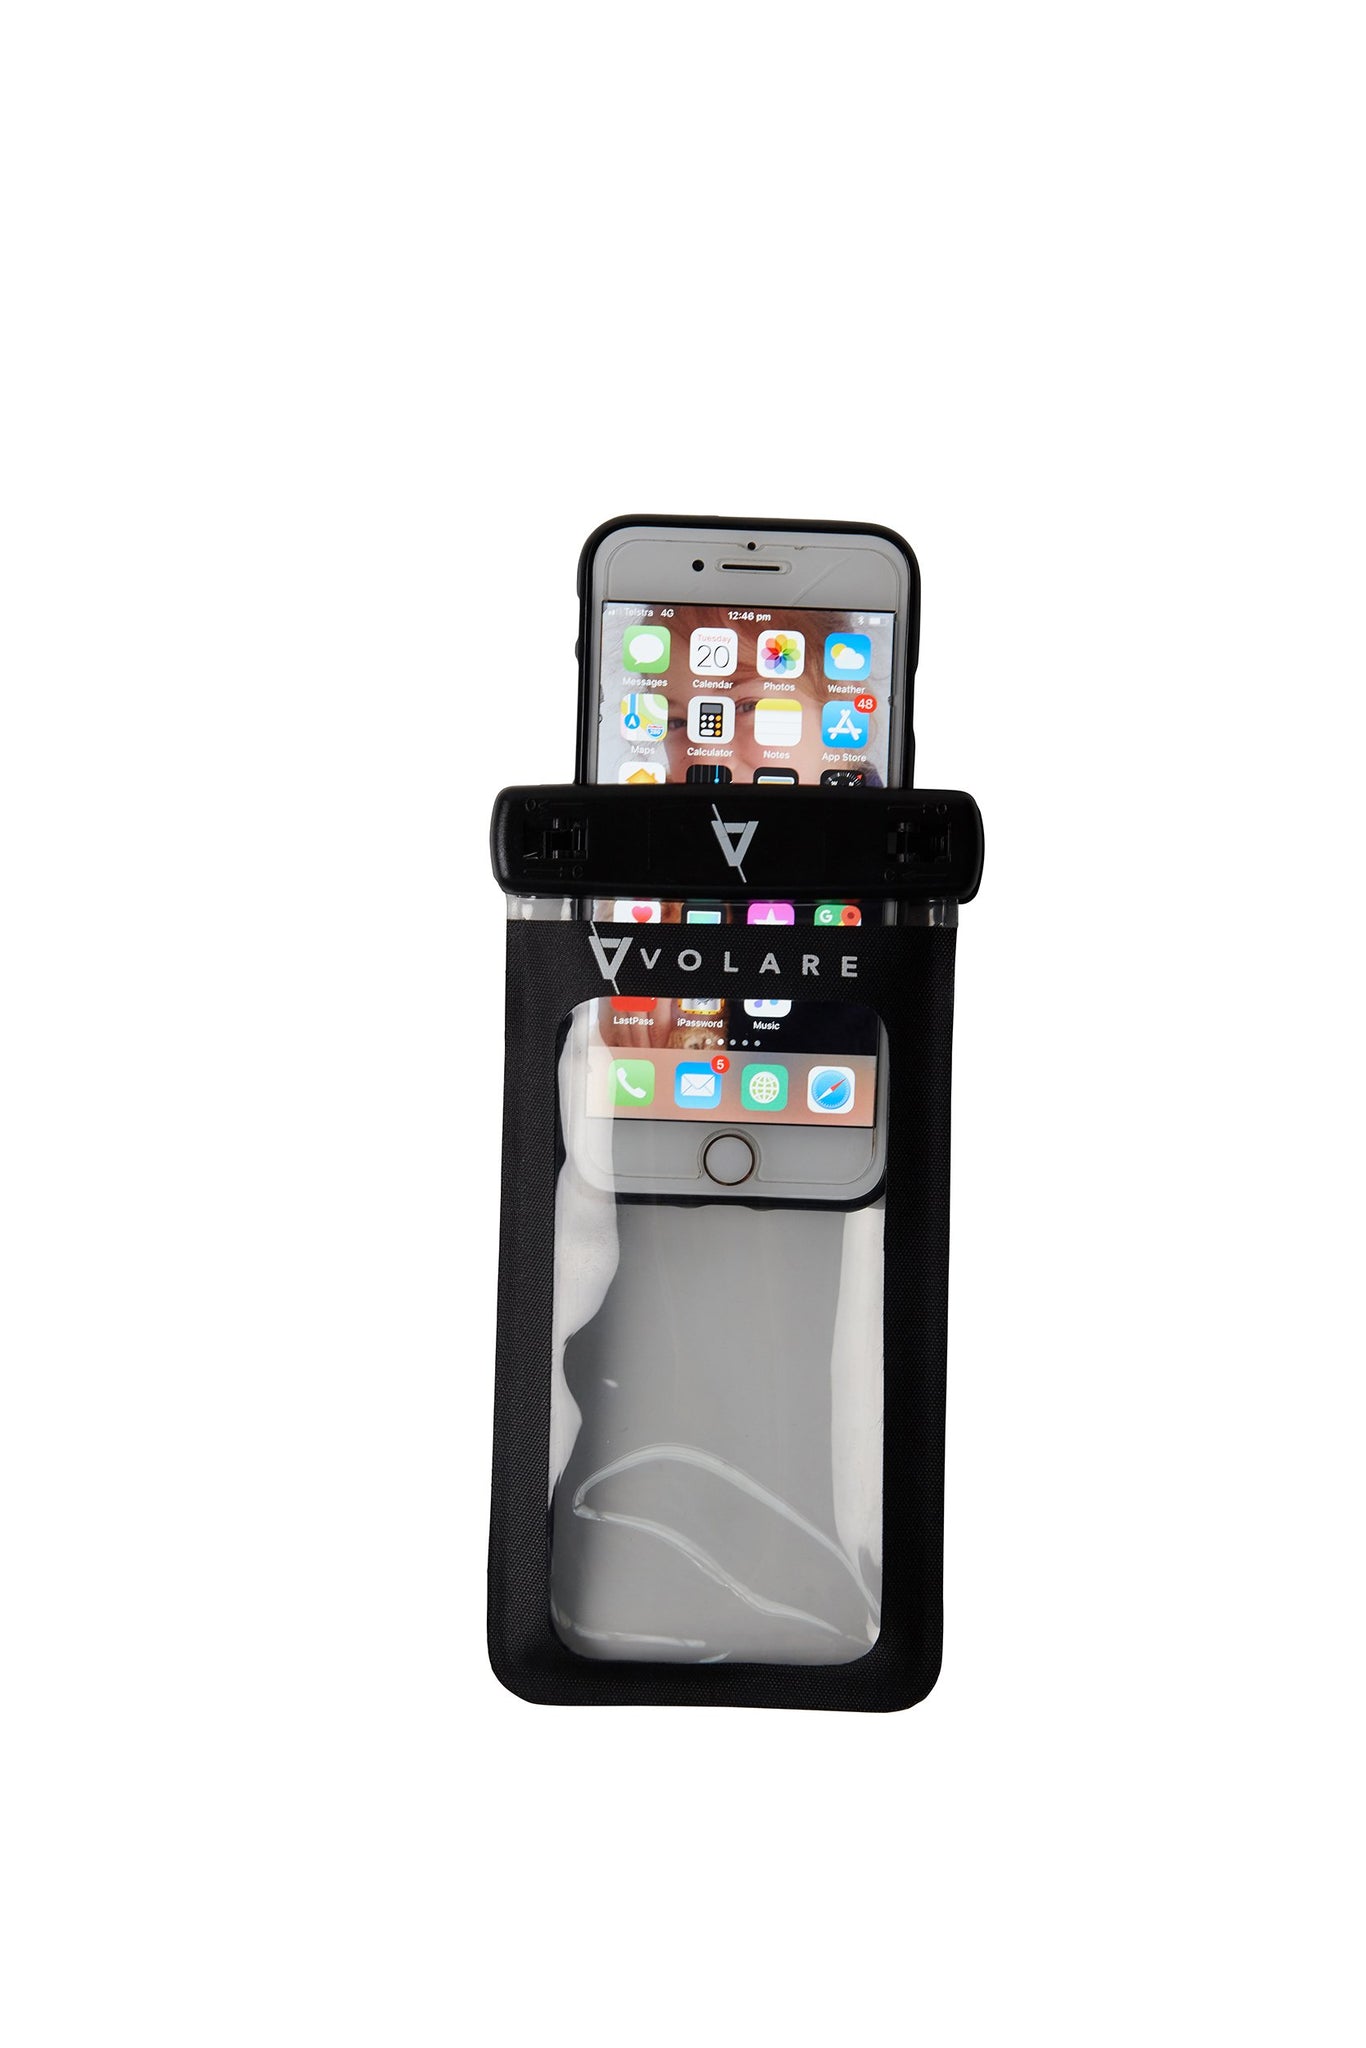 Waterproof Small Phone Case